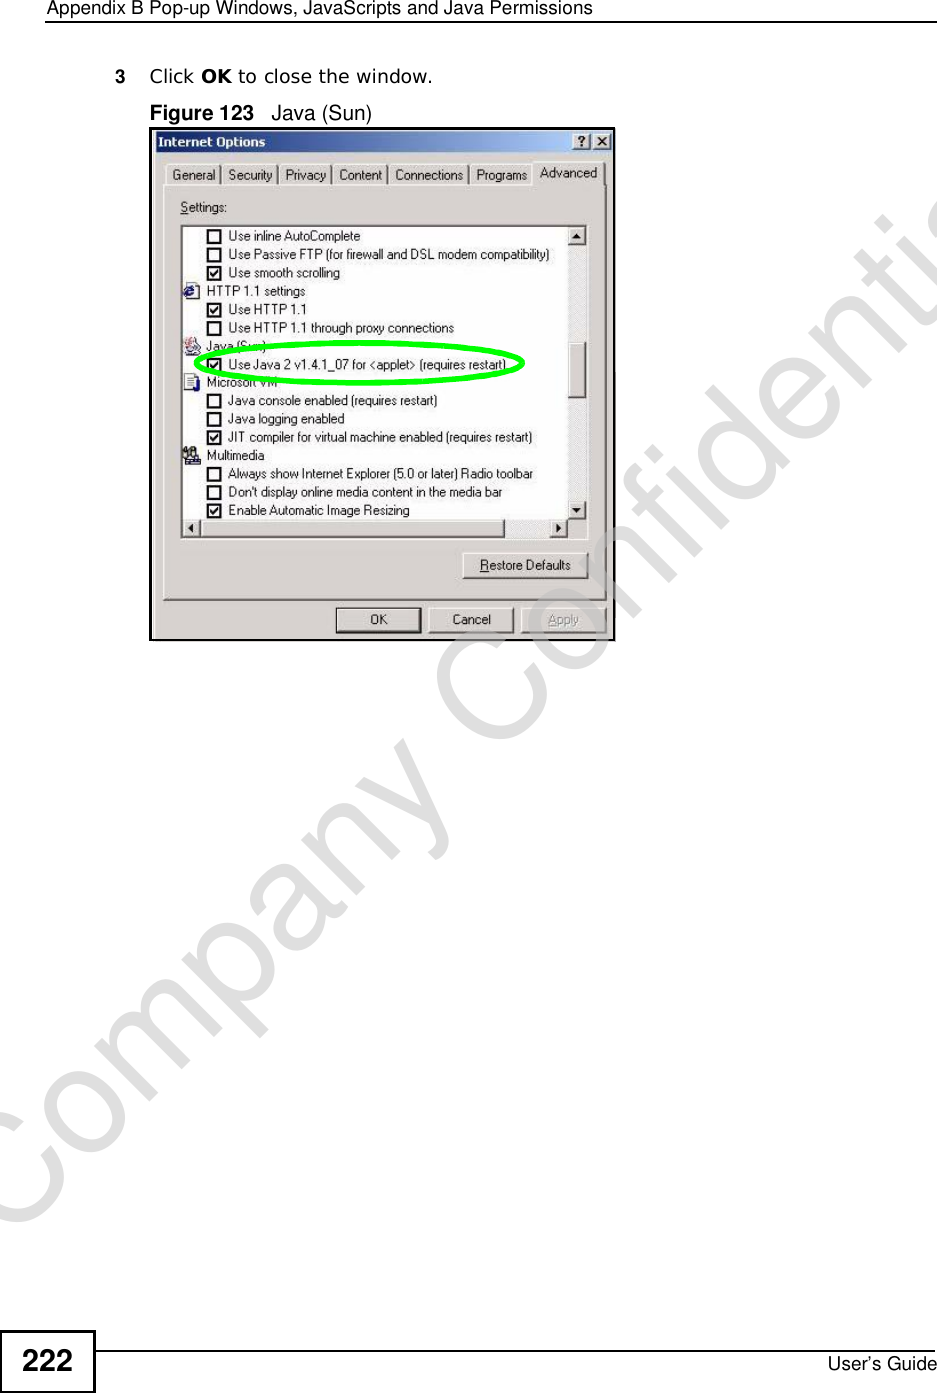 Appendix BPop-up Windows, JavaScripts and Java PermissionsUser’s Guide2223Click OK to close the window.Figure 123   Java (Sun)Company Confidential